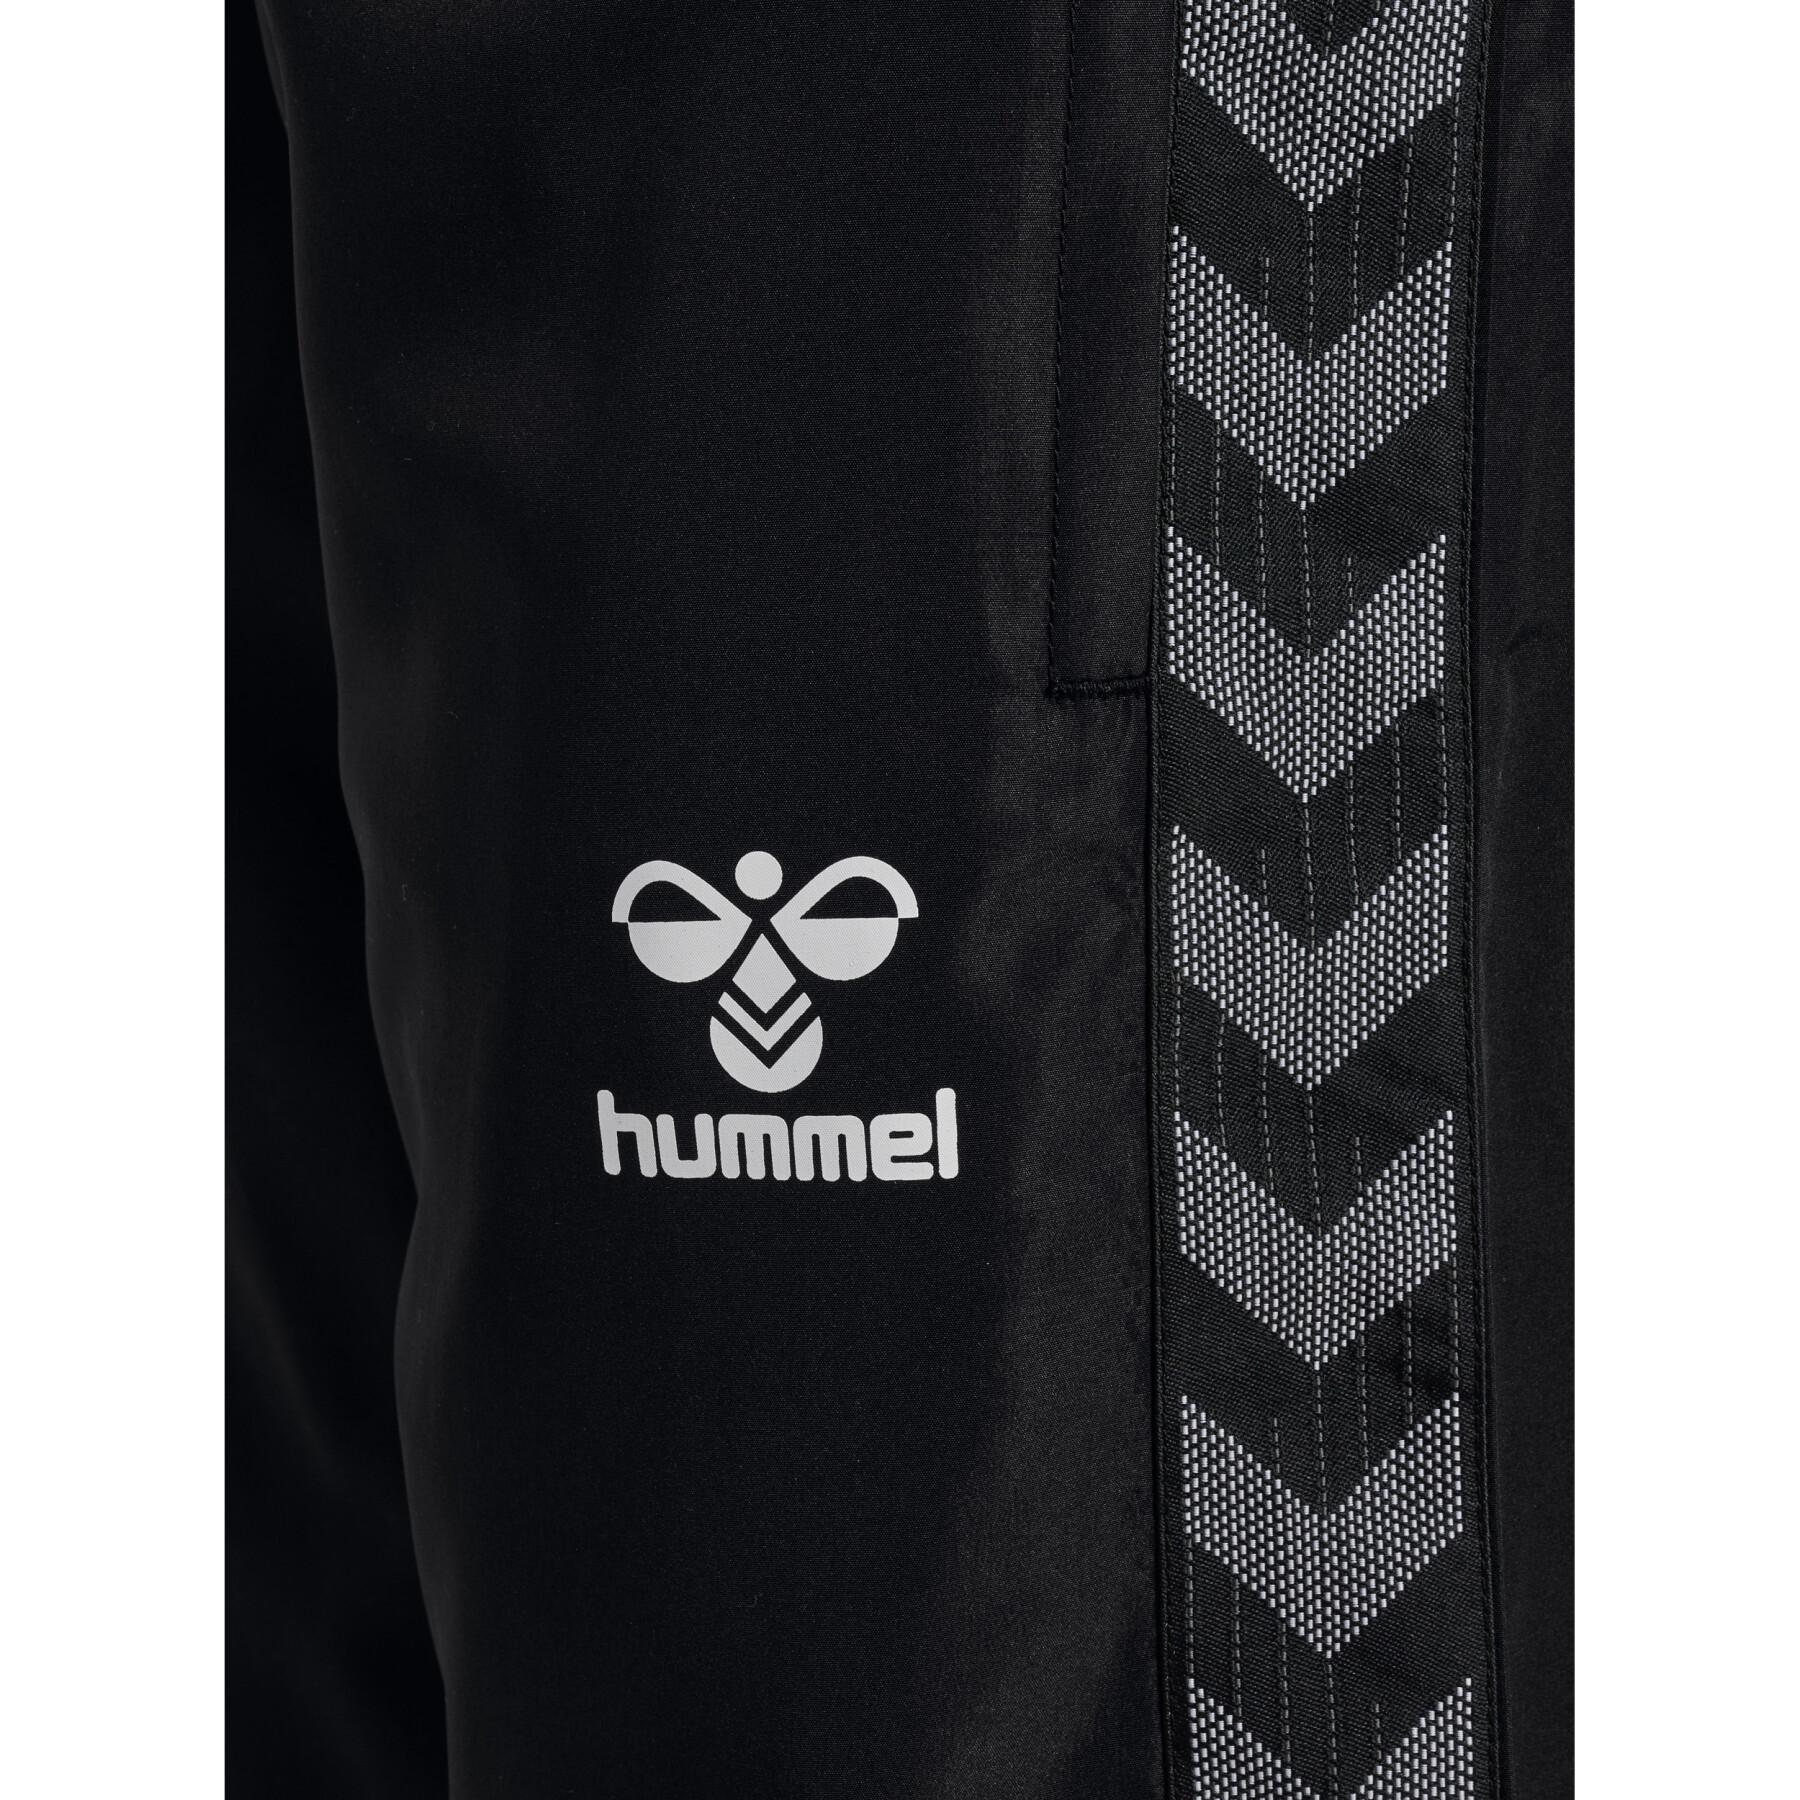 Jogging Hummel Authentic Micro